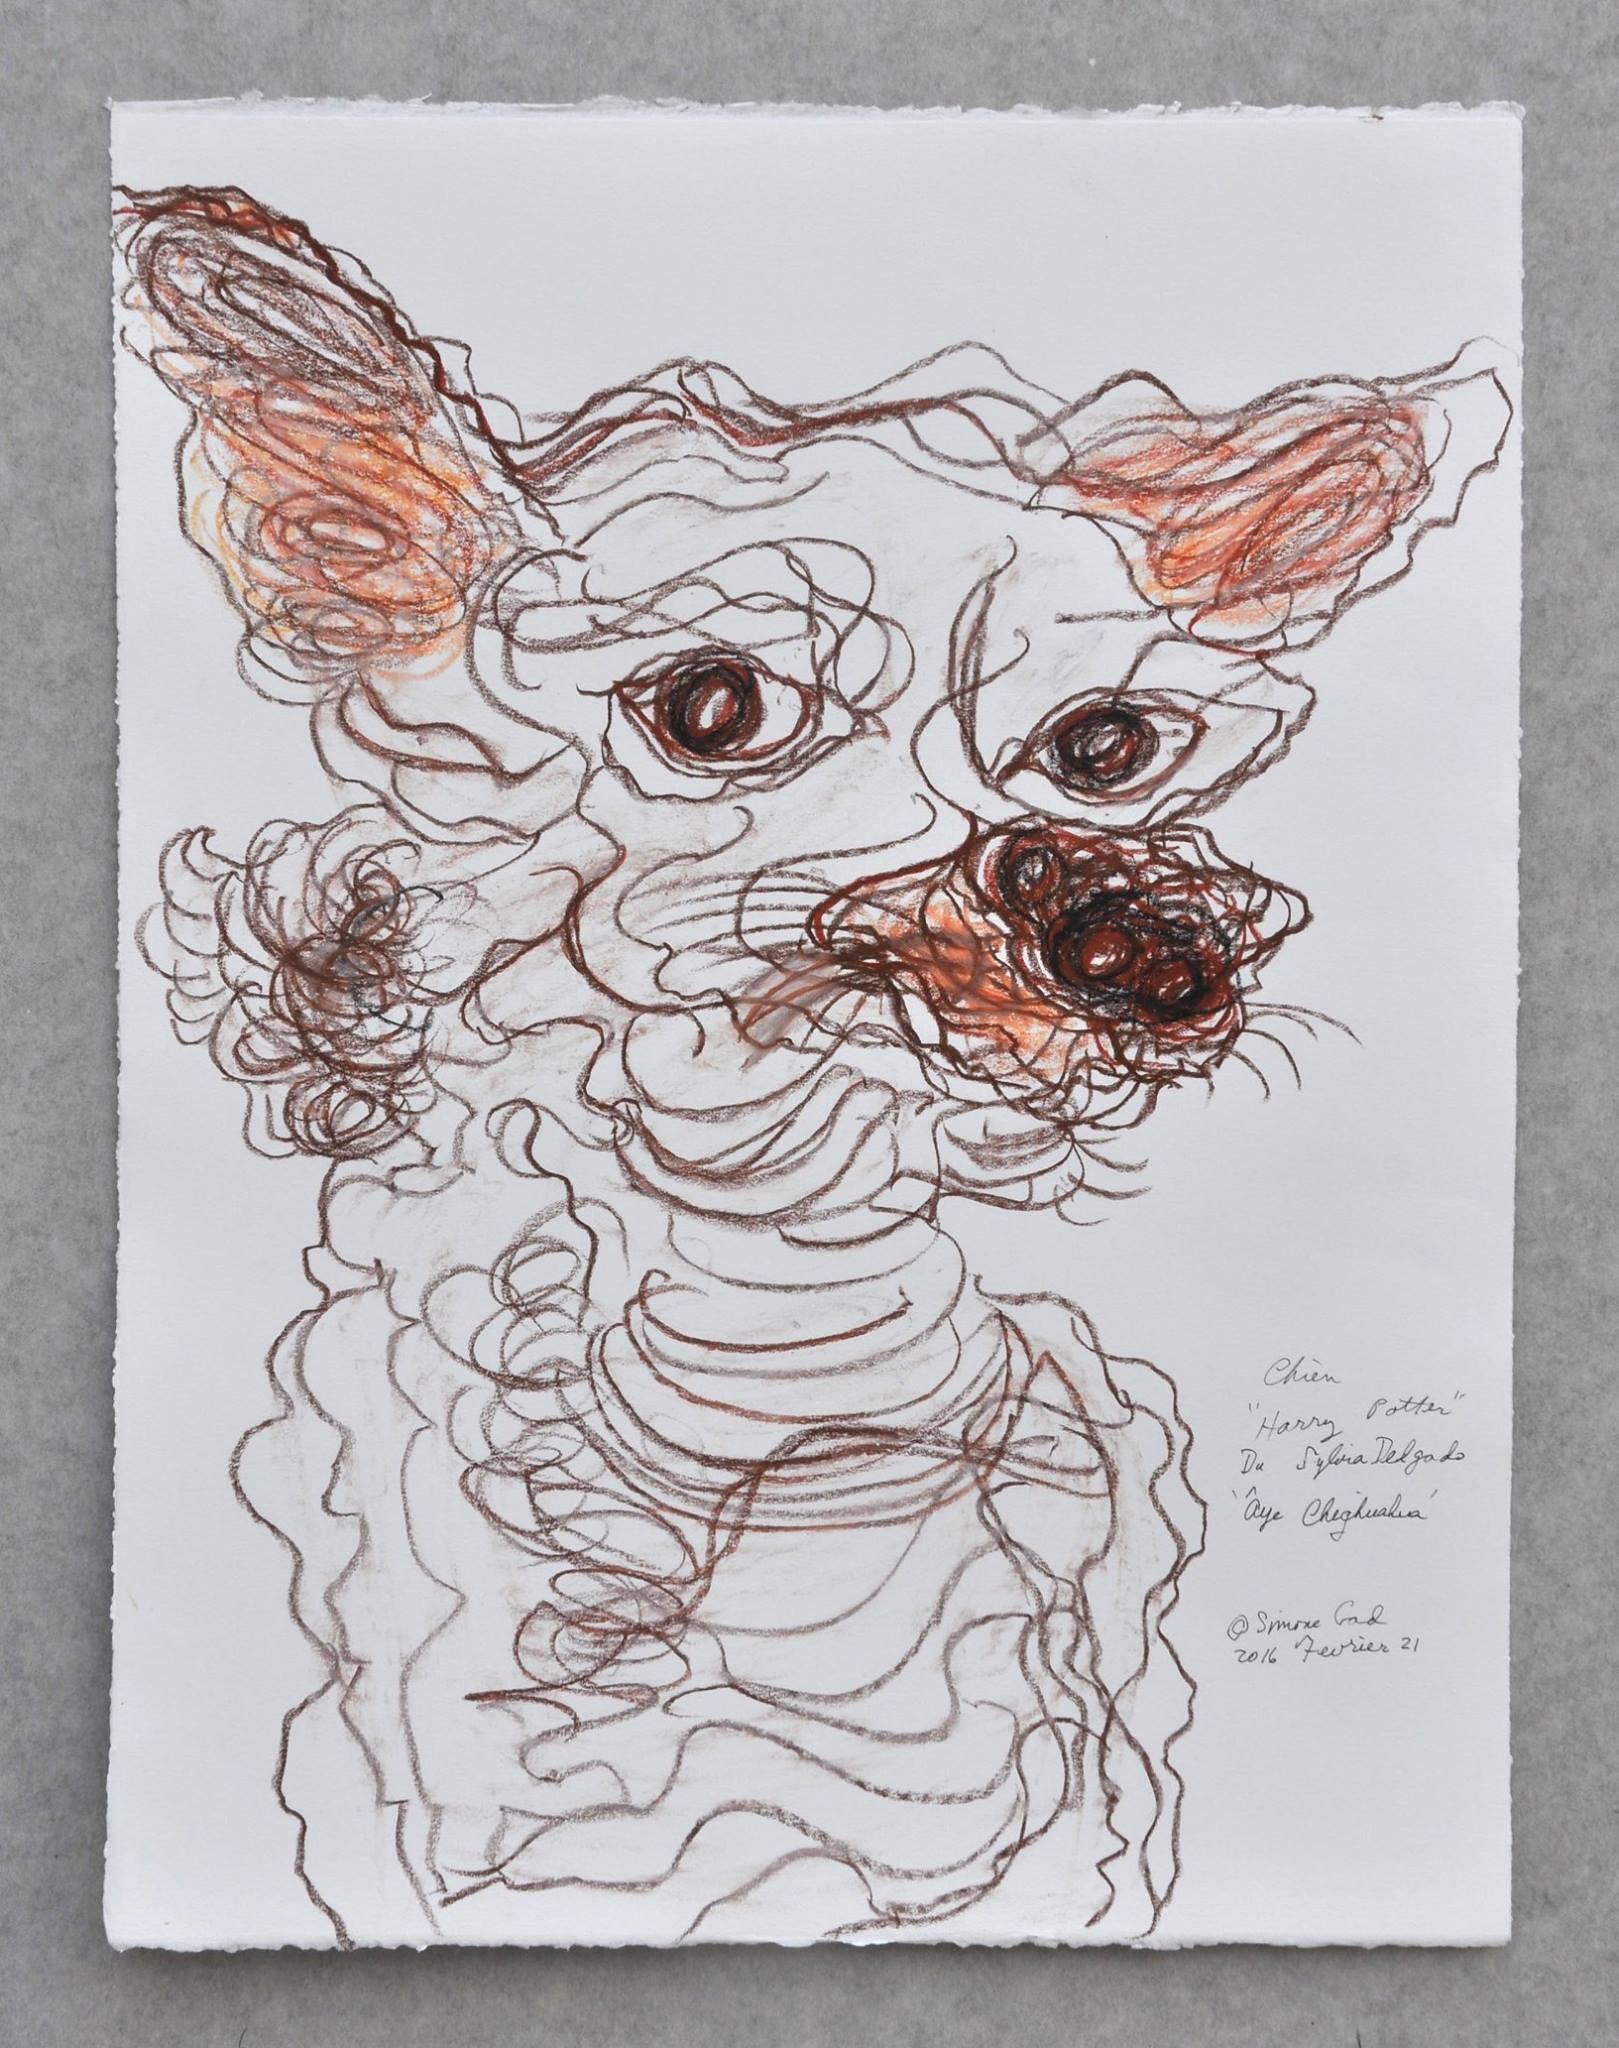 Simone Gad Animal Art - Aye Chichuahua / Harry Potter du Sylvia Delgado